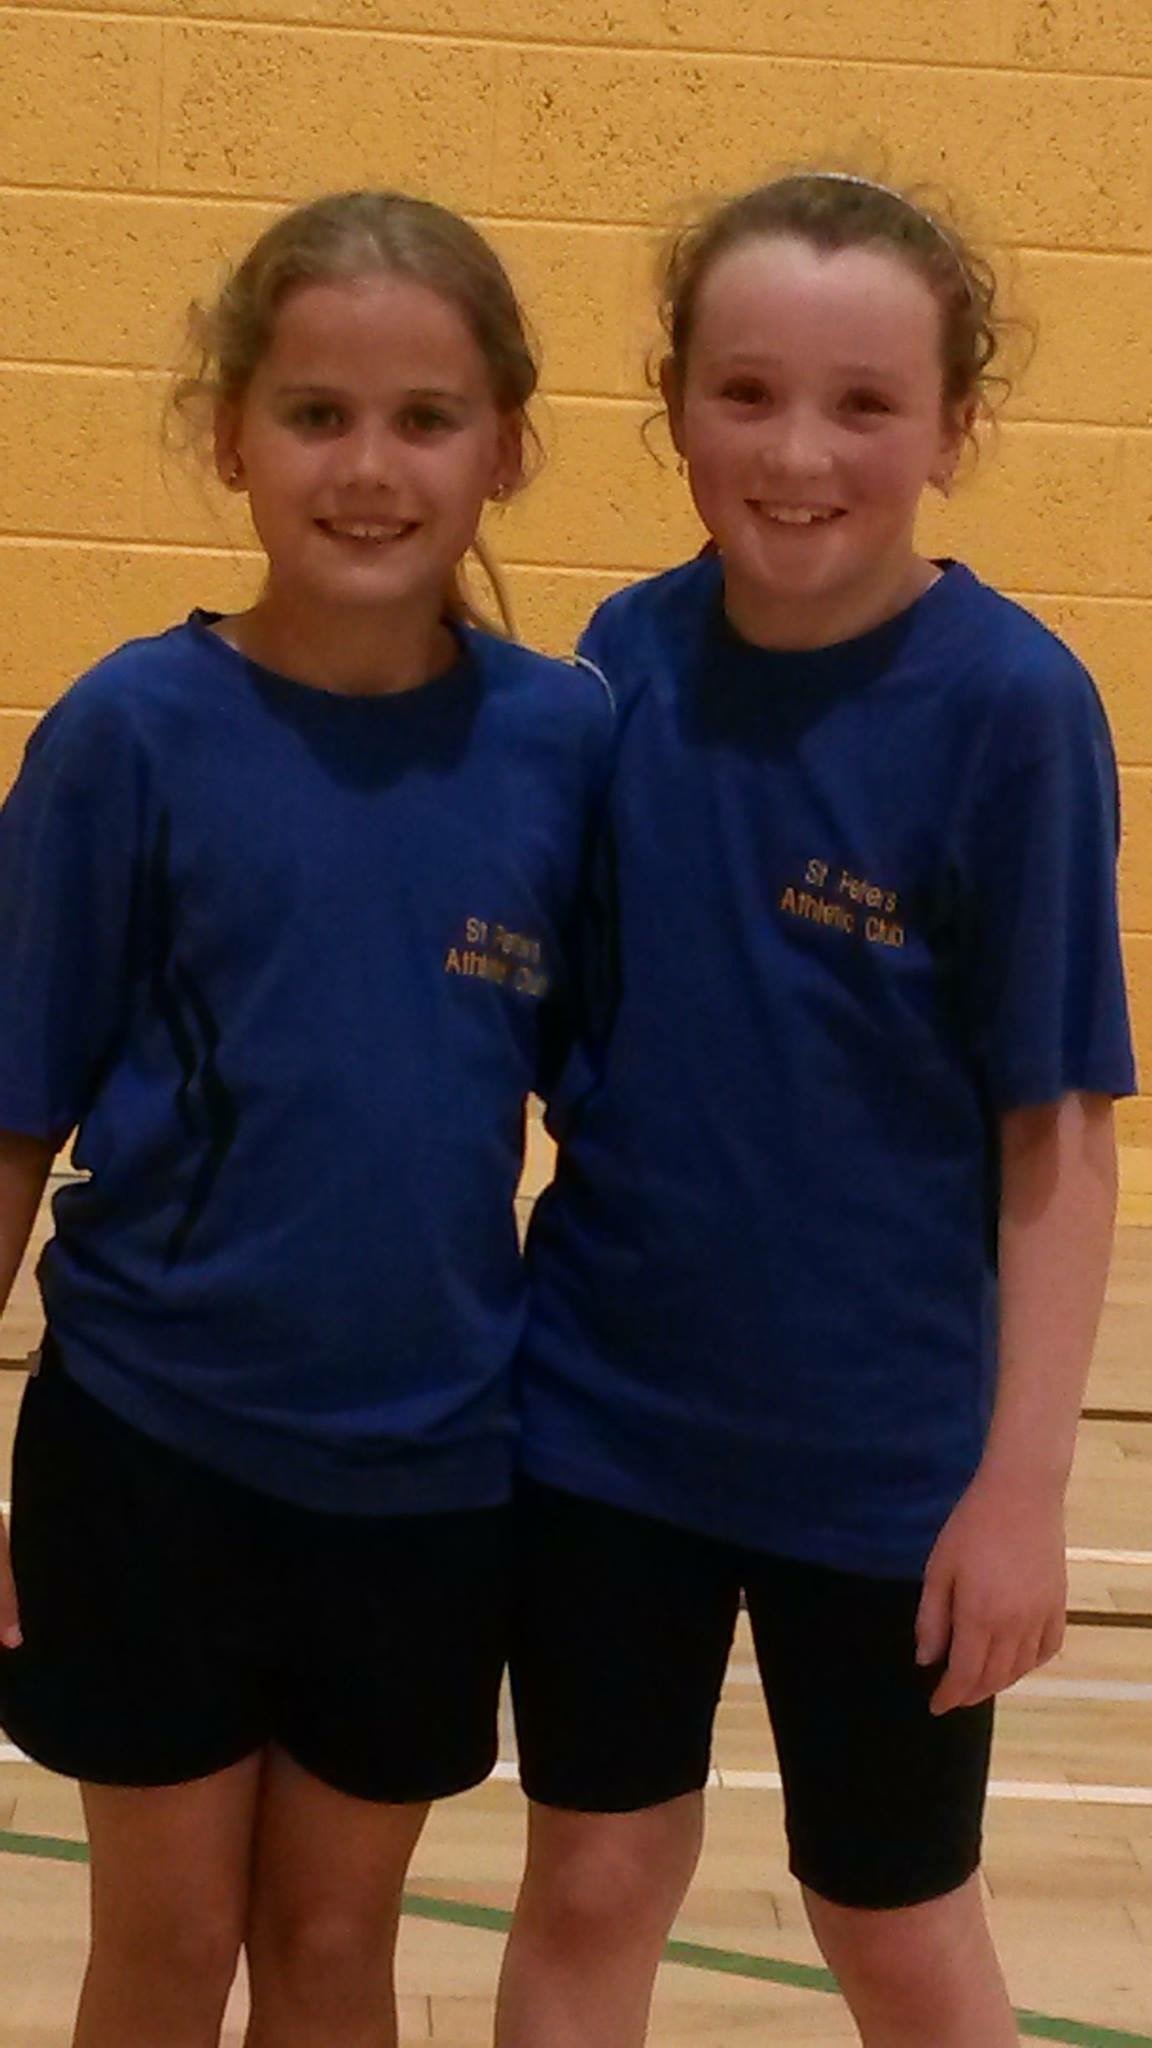 Isibeal Fitzpatrick and Katie Mulligan at Irish Childrens' Games (Tullamore, June 2015)